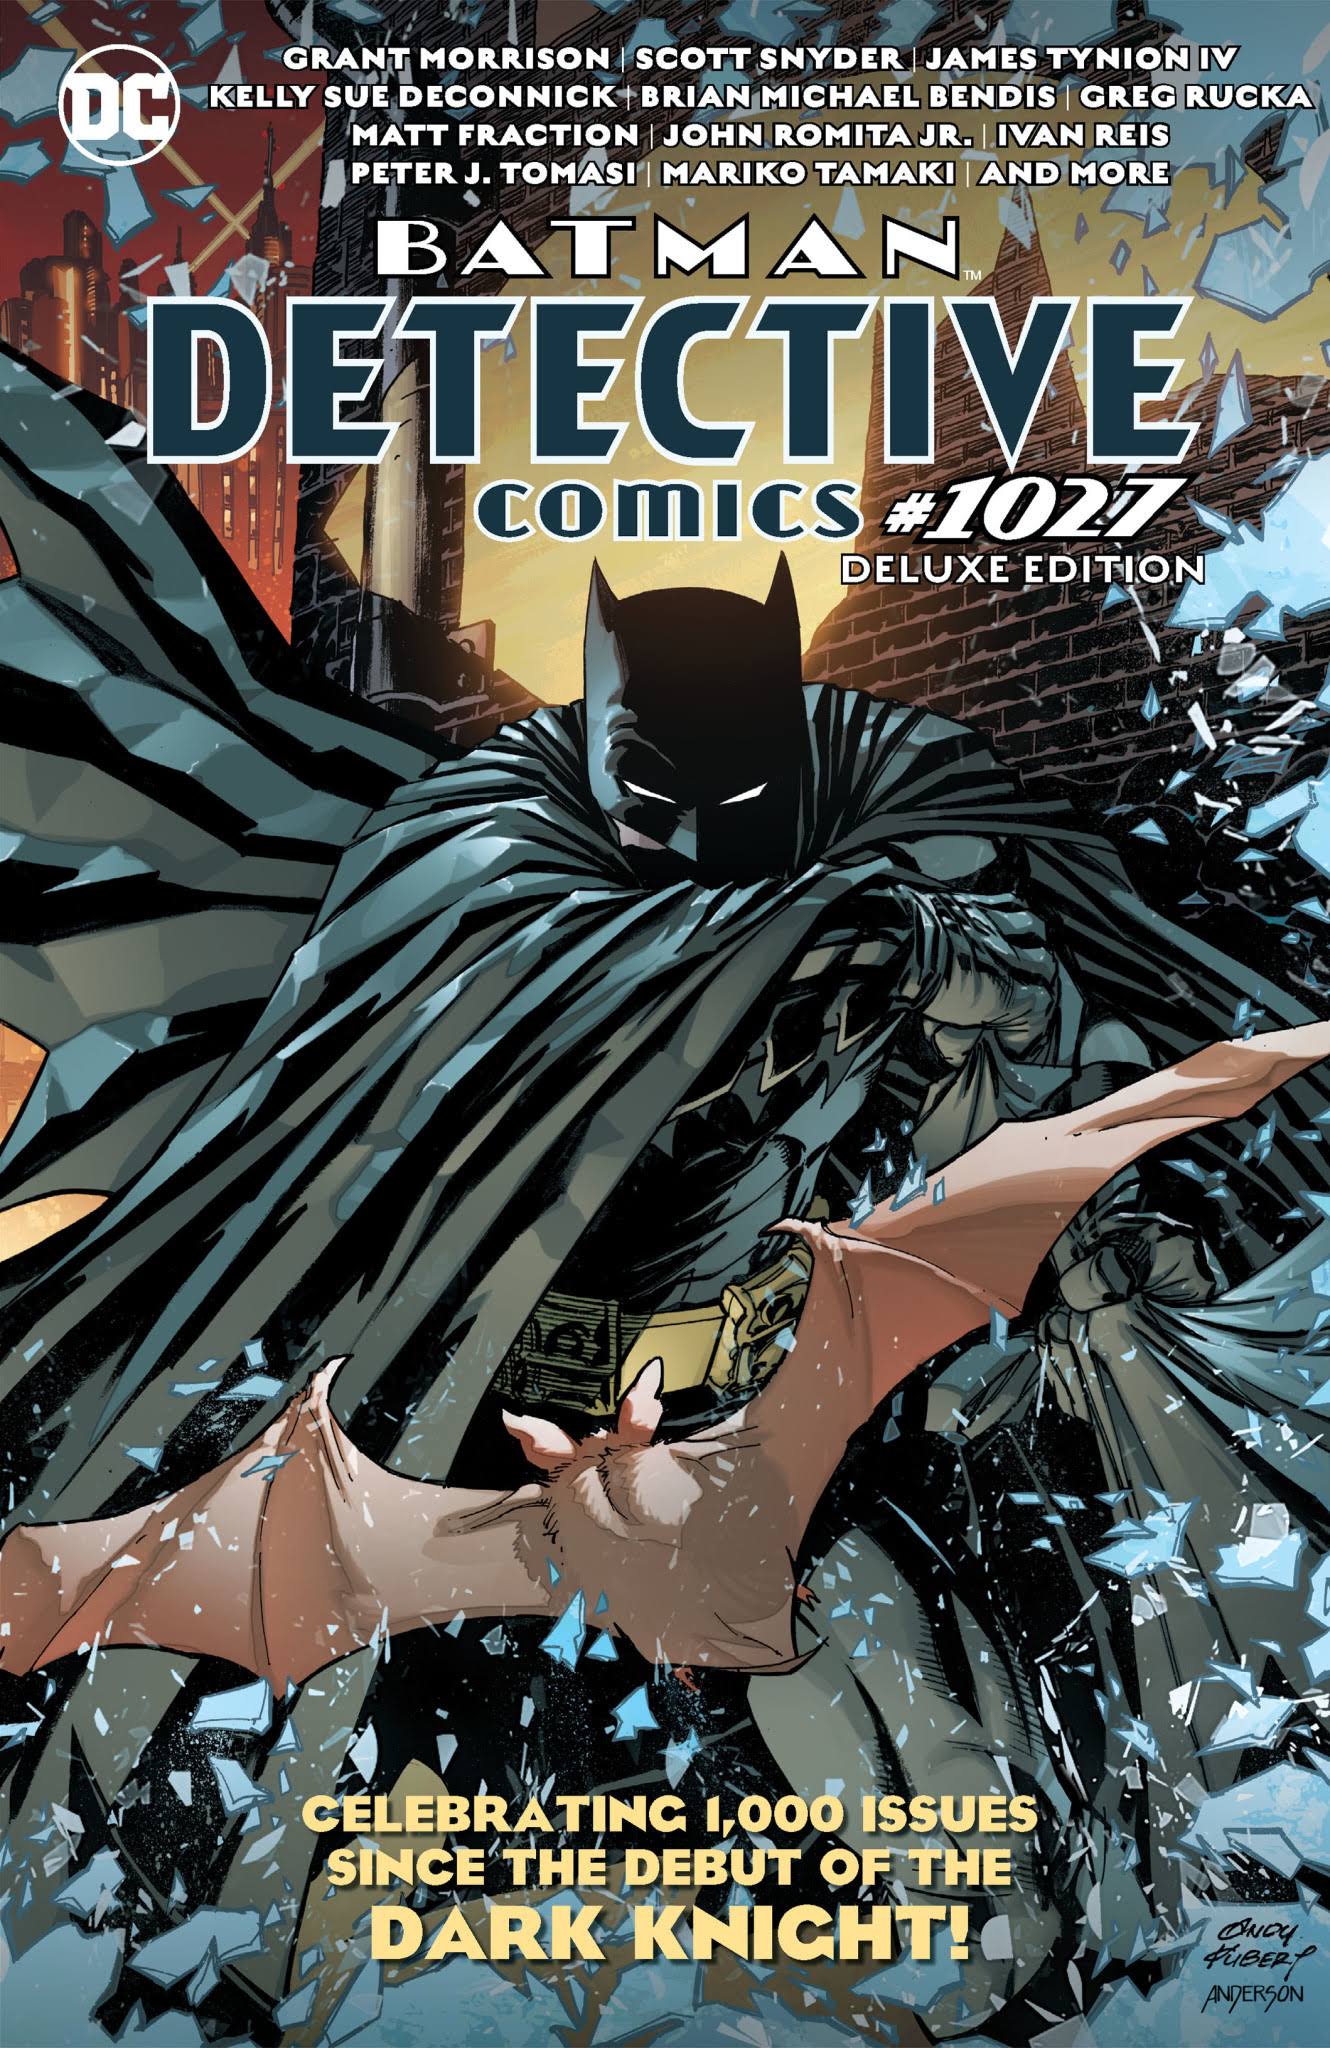 Batman : Detective Comics #1027, Deluxe Edition by Various